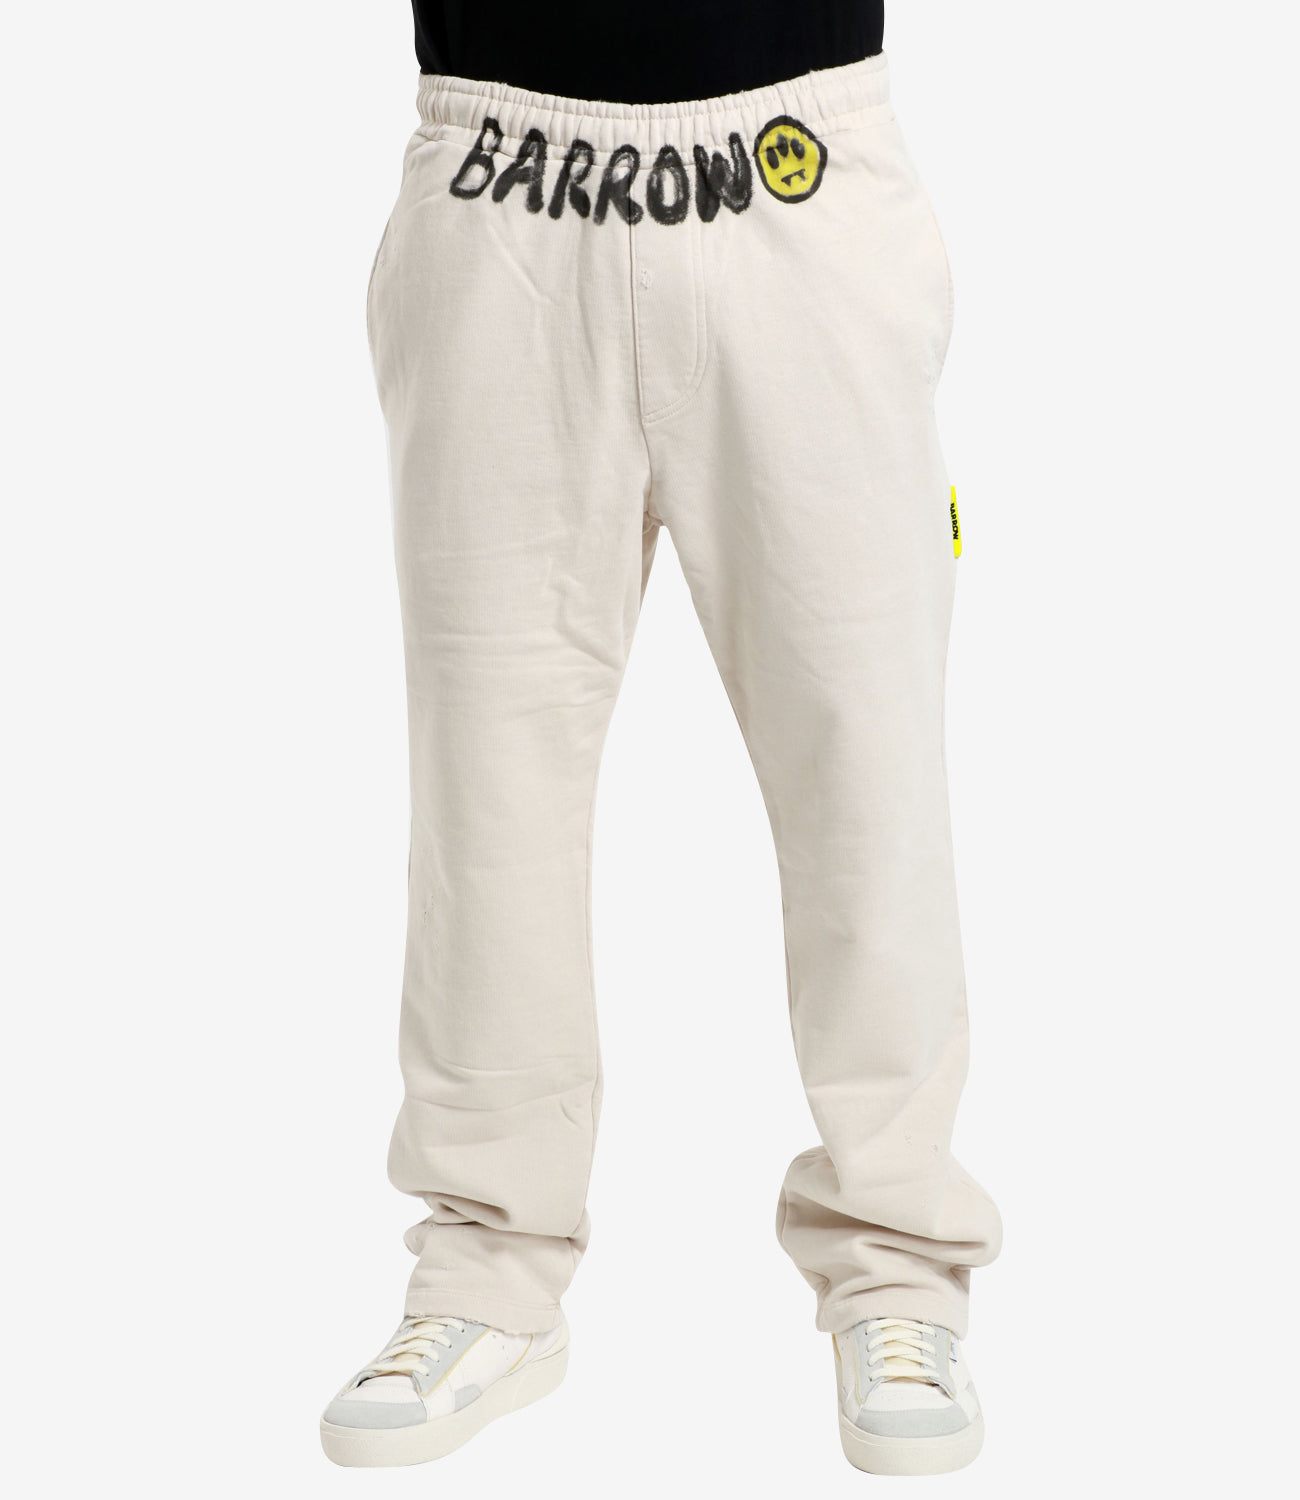 Barrow | Cream Trousers